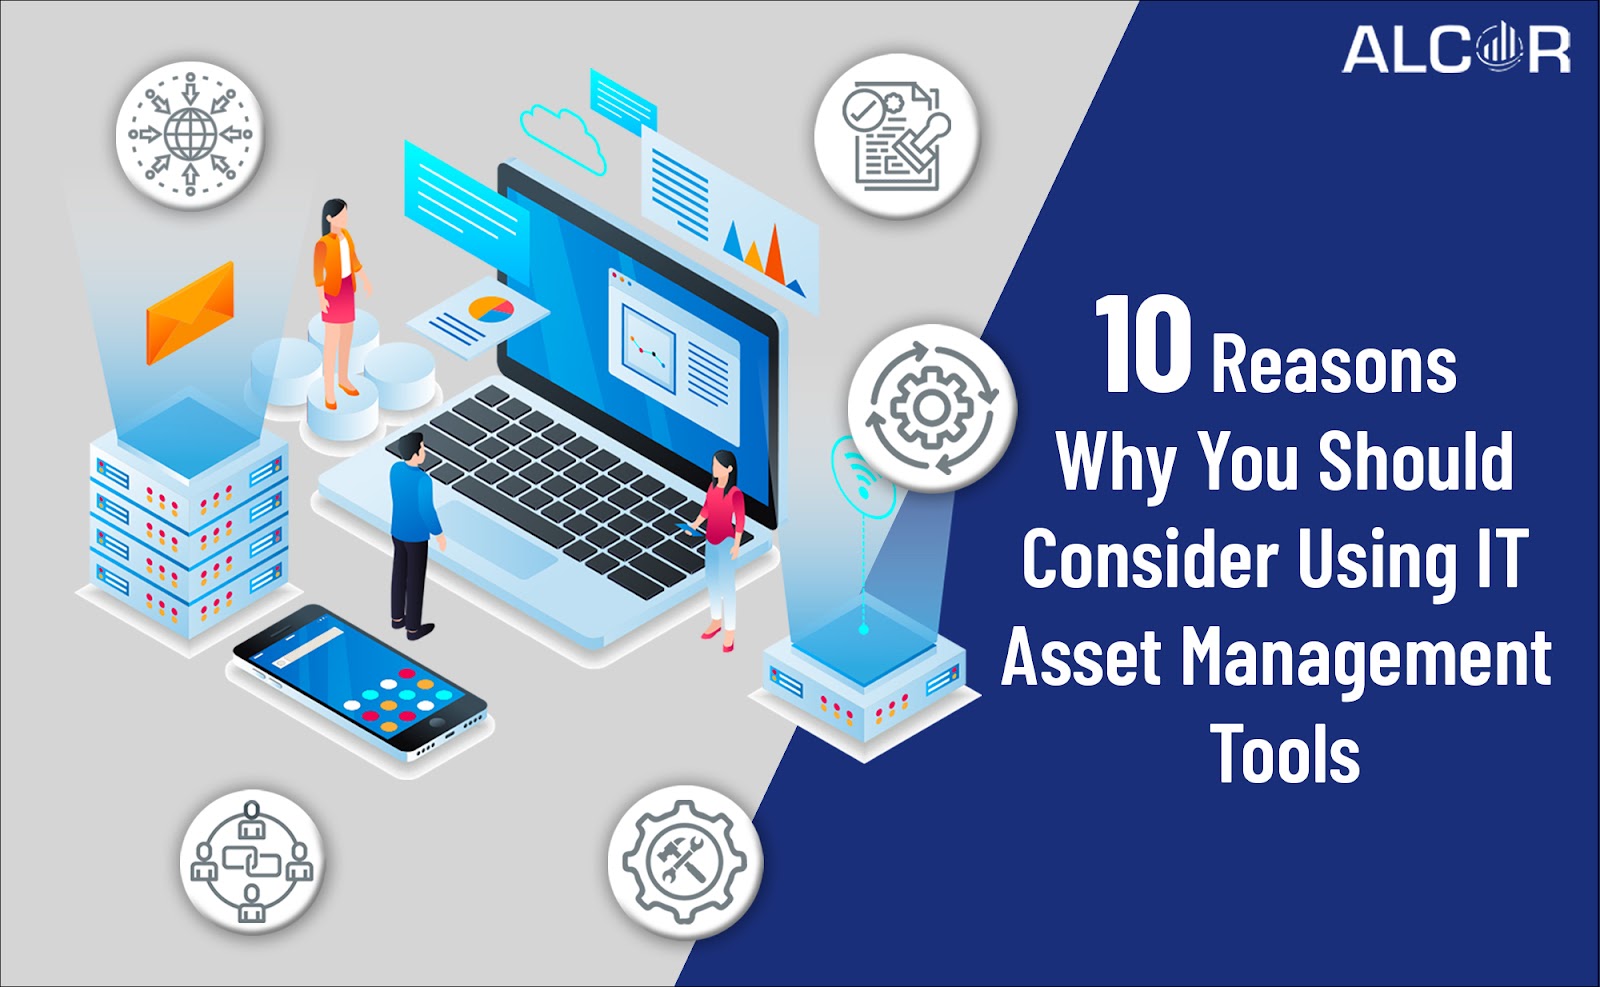 Using IT Asset Management Tools